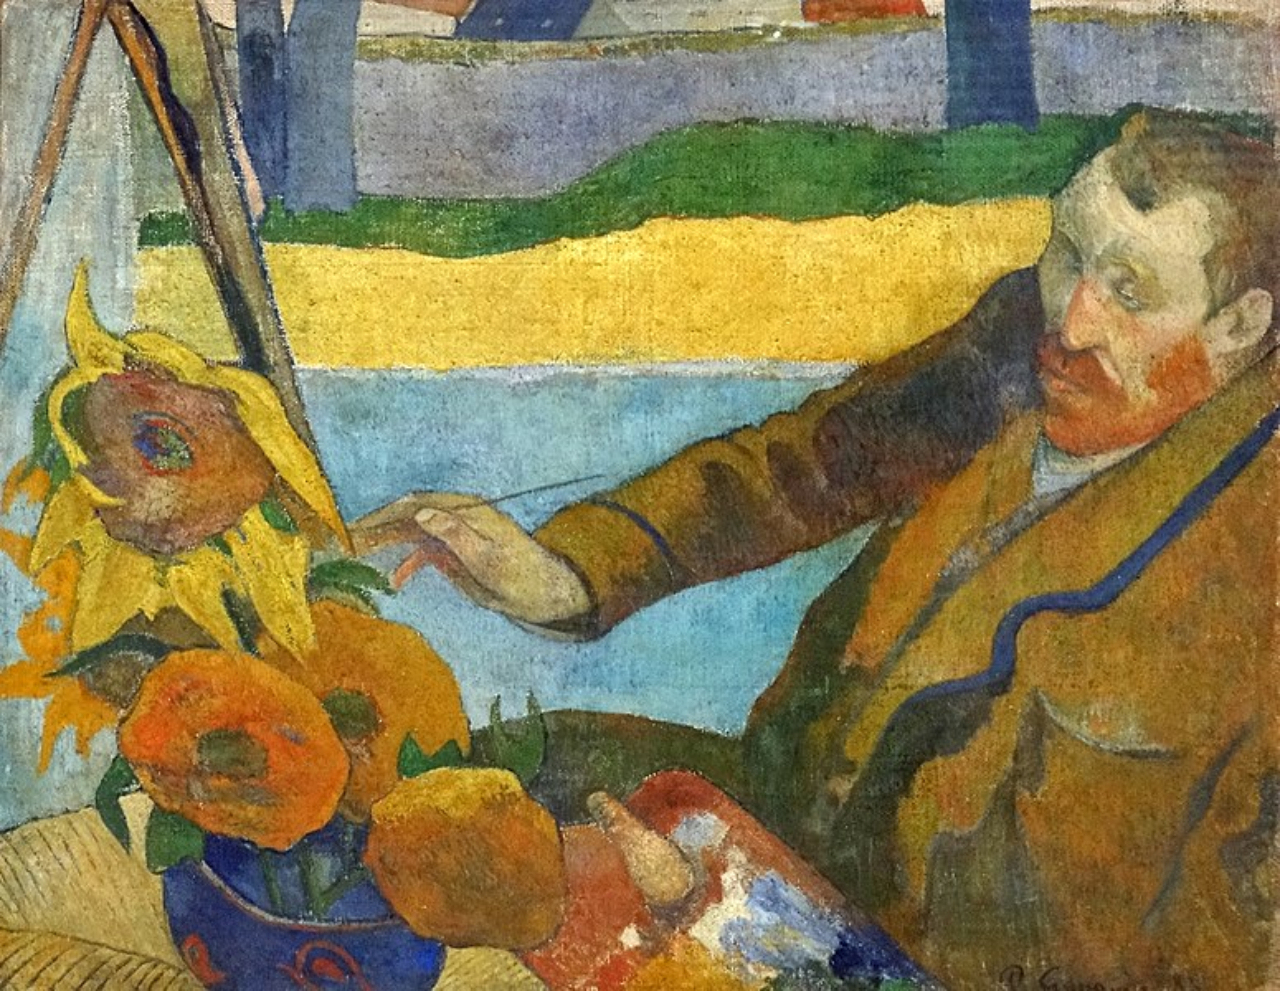 Quadro 'Vincent van Gogh pintando girassóis', de Paul Gauguin